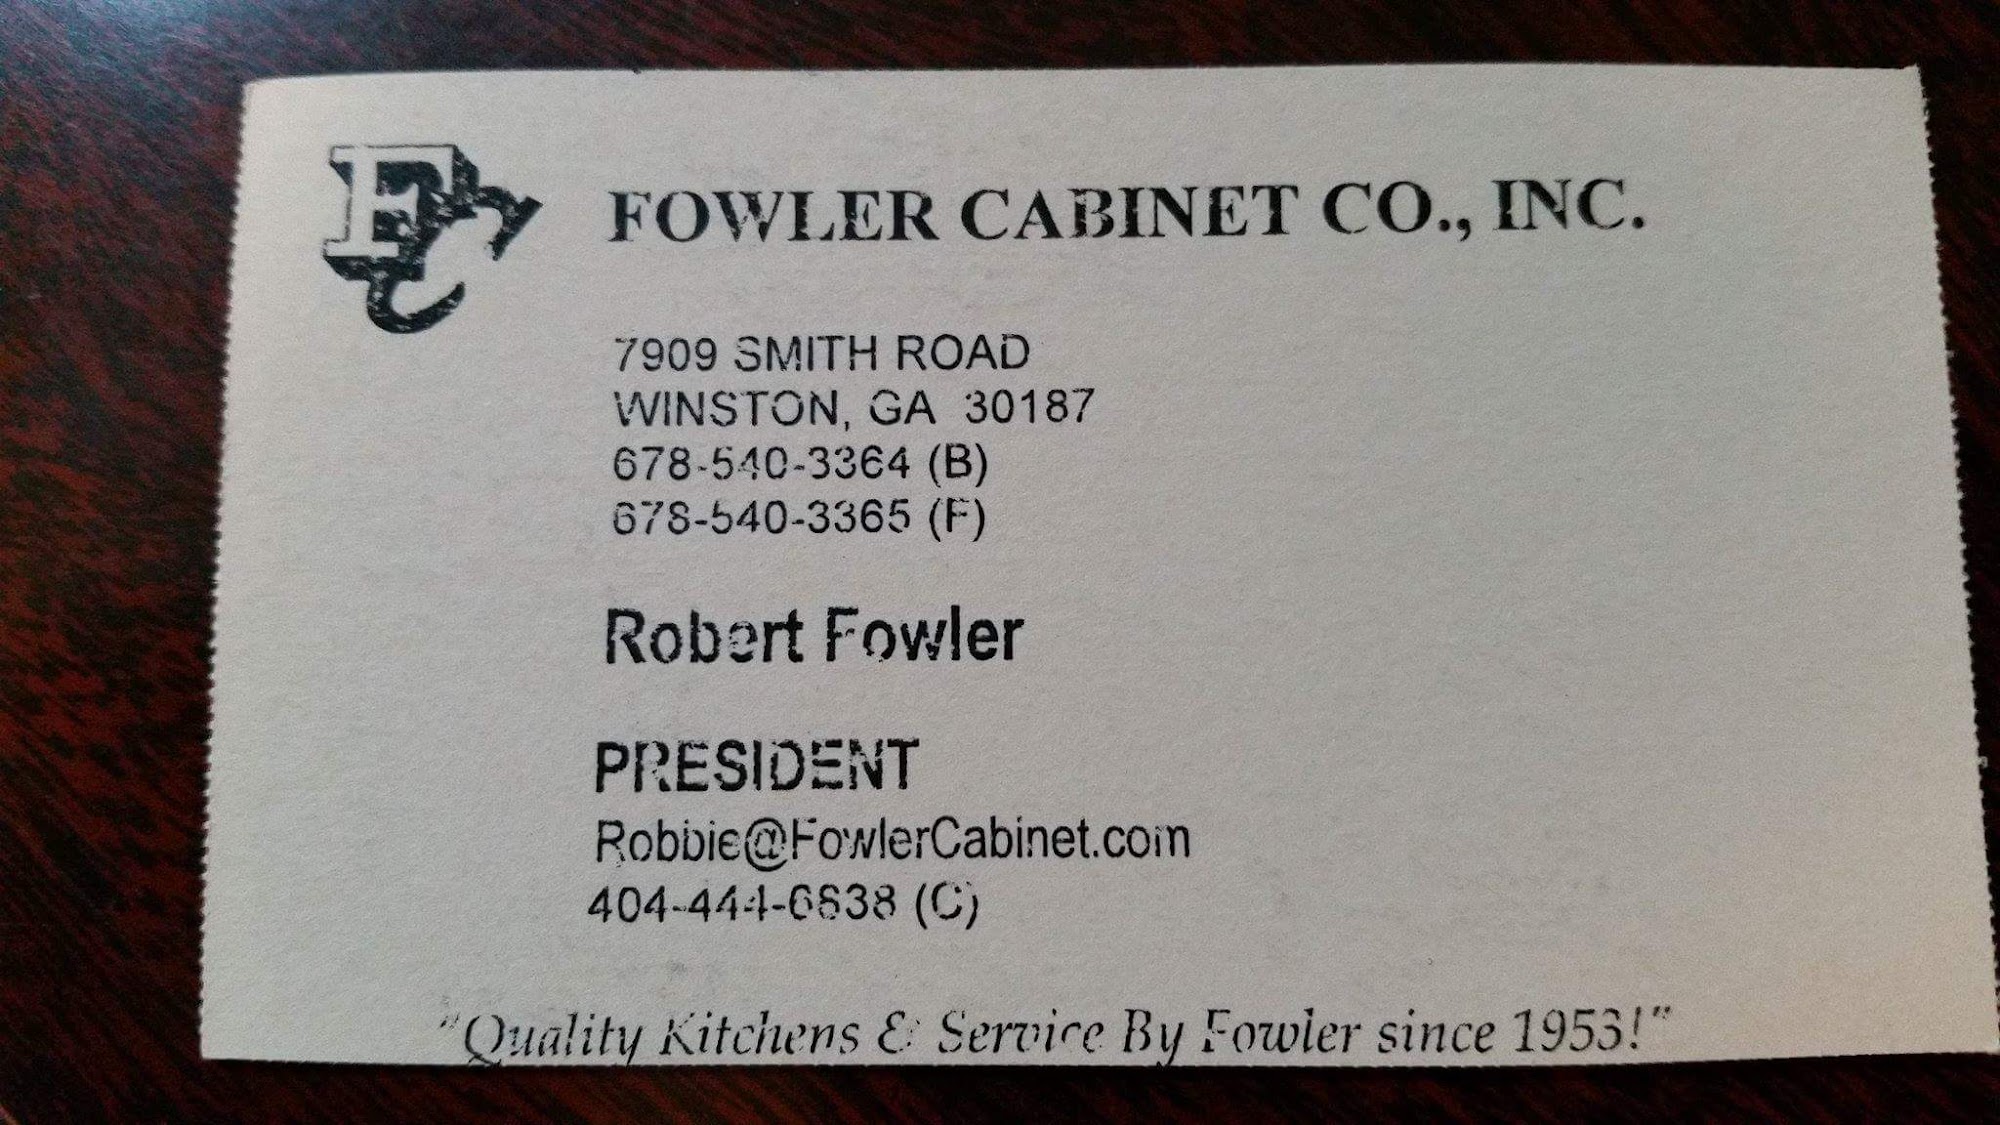 Fowler Cabinet Co Inc 7909 Smith Rd, Winston Georgia 30187